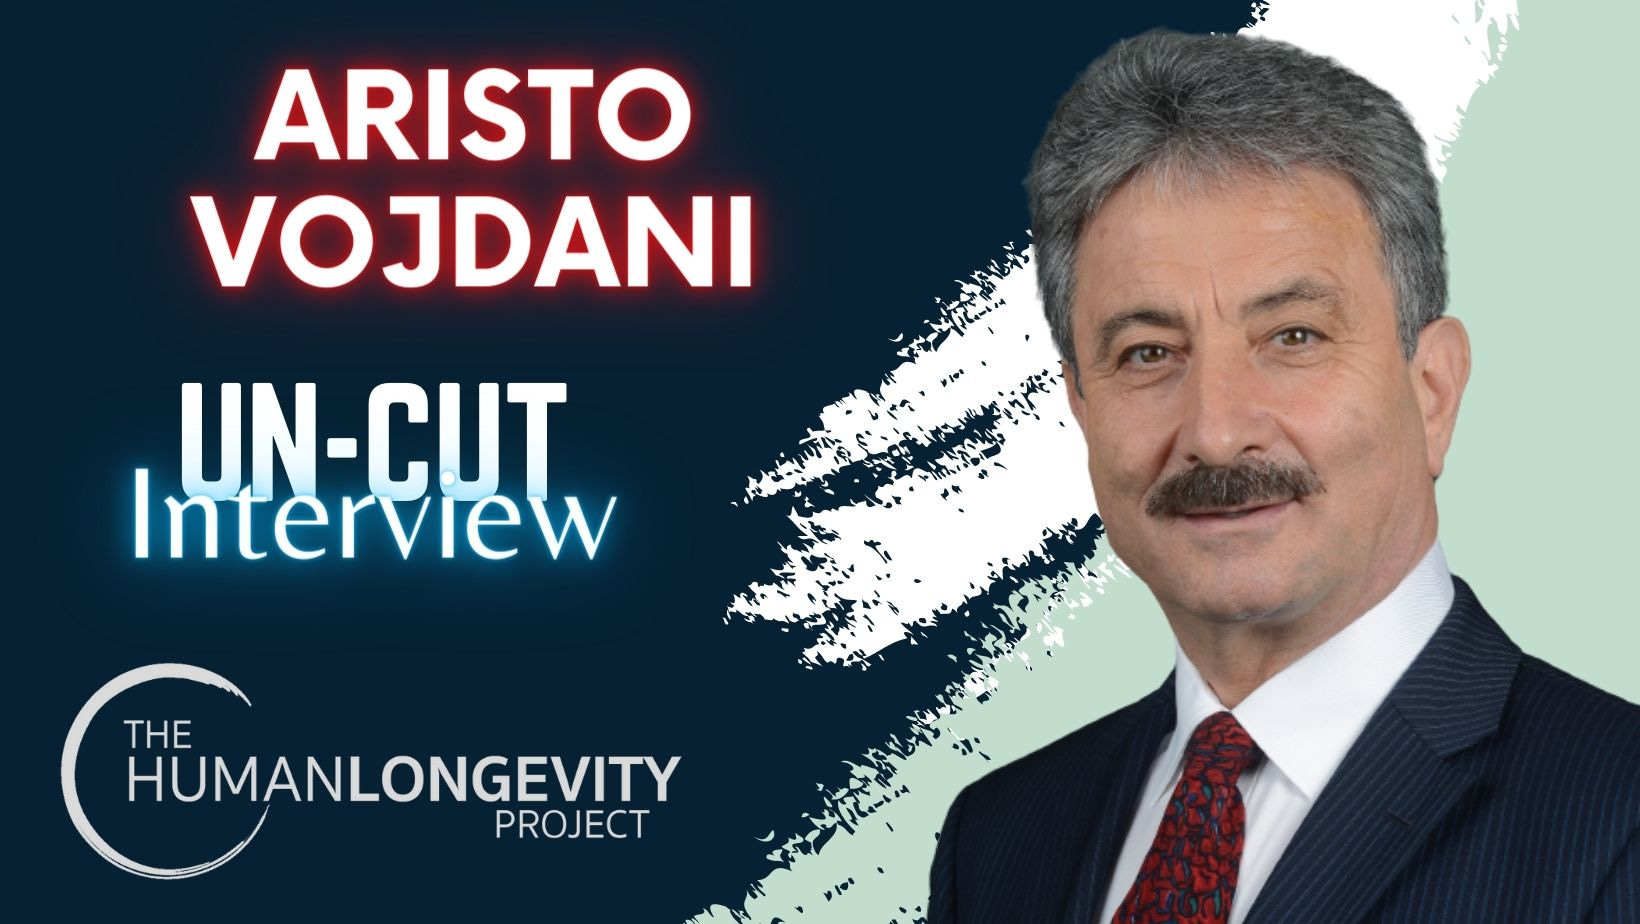 Human Longevity Project Uncut Interview With Dr. Aristo Vojdani